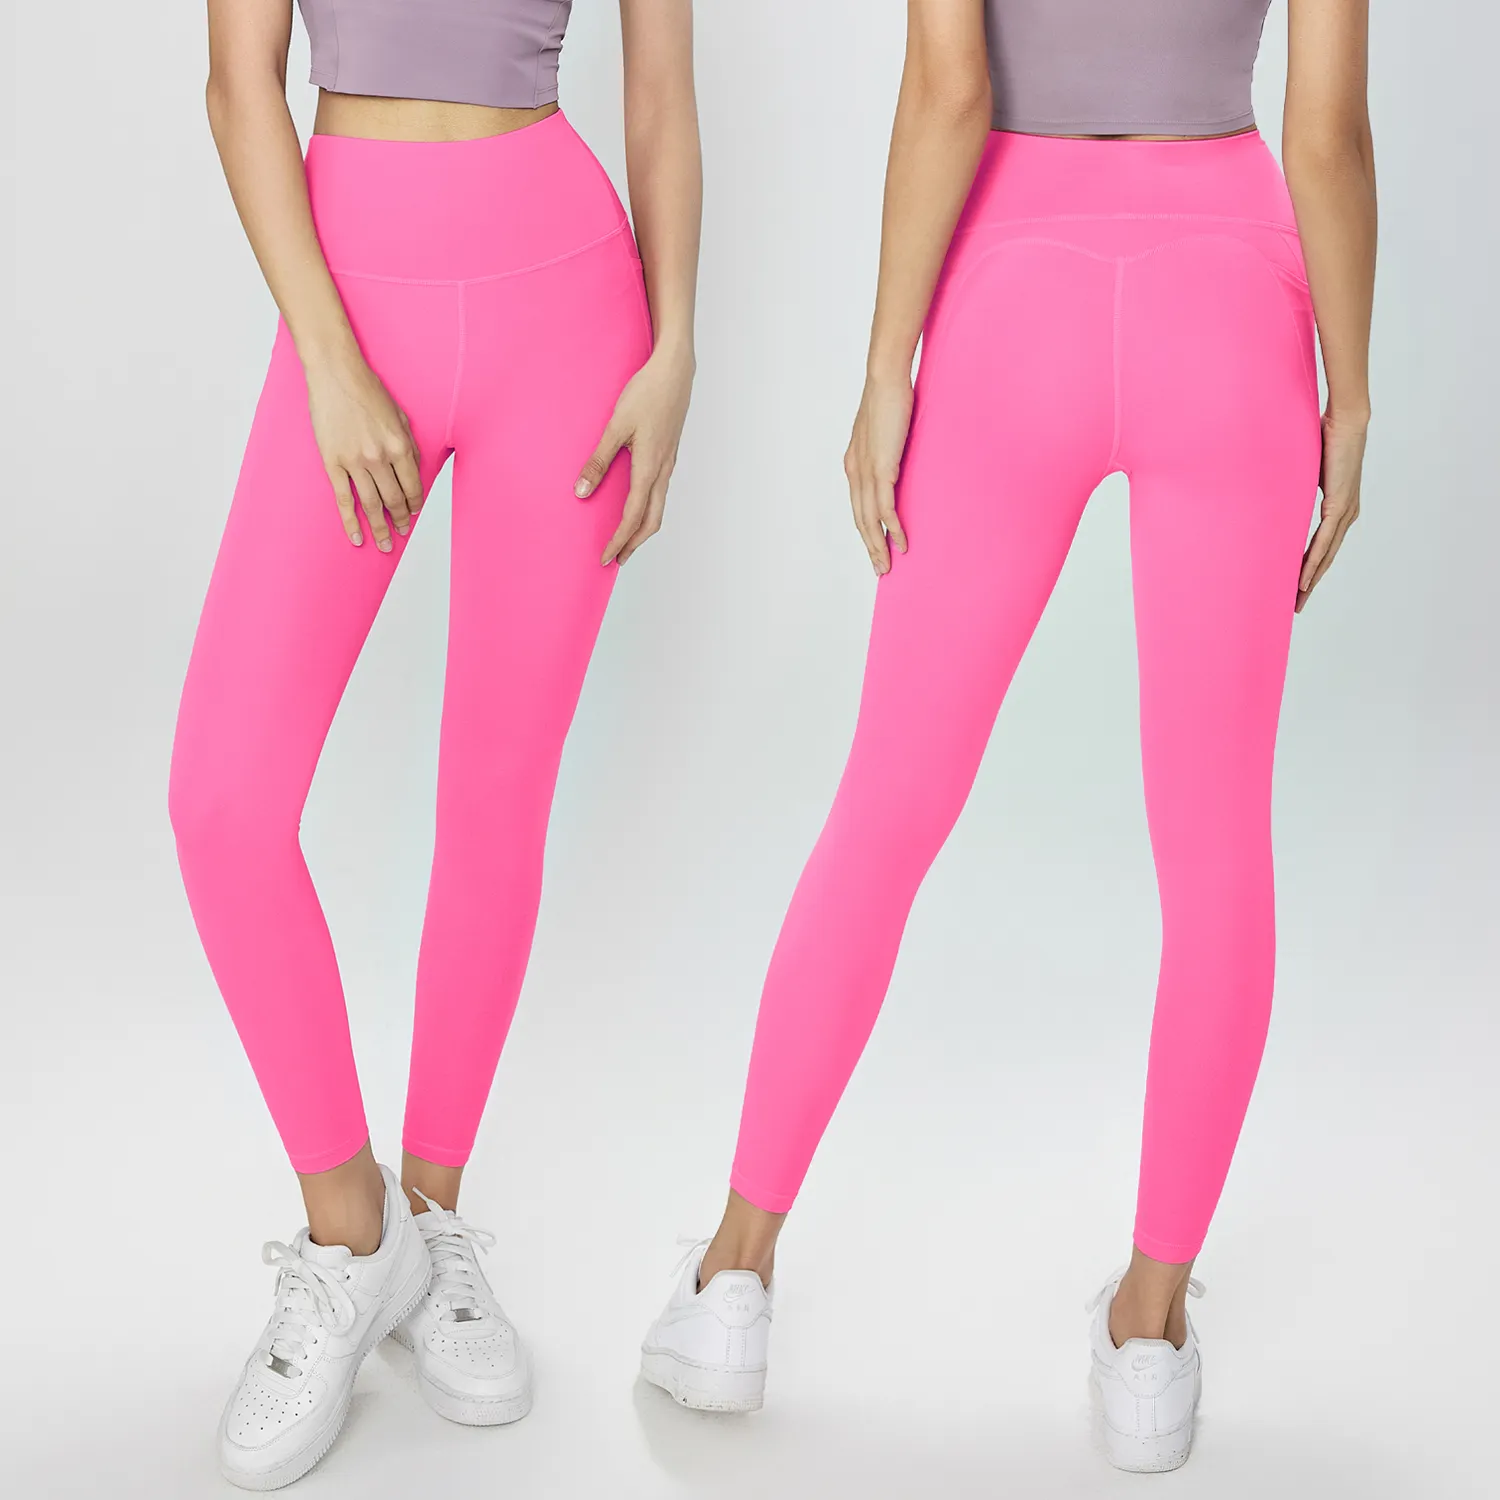 NUT New Arrive Peach Buttock Leggings Yoga Pants Gym Leggings For Women Yoga Pants